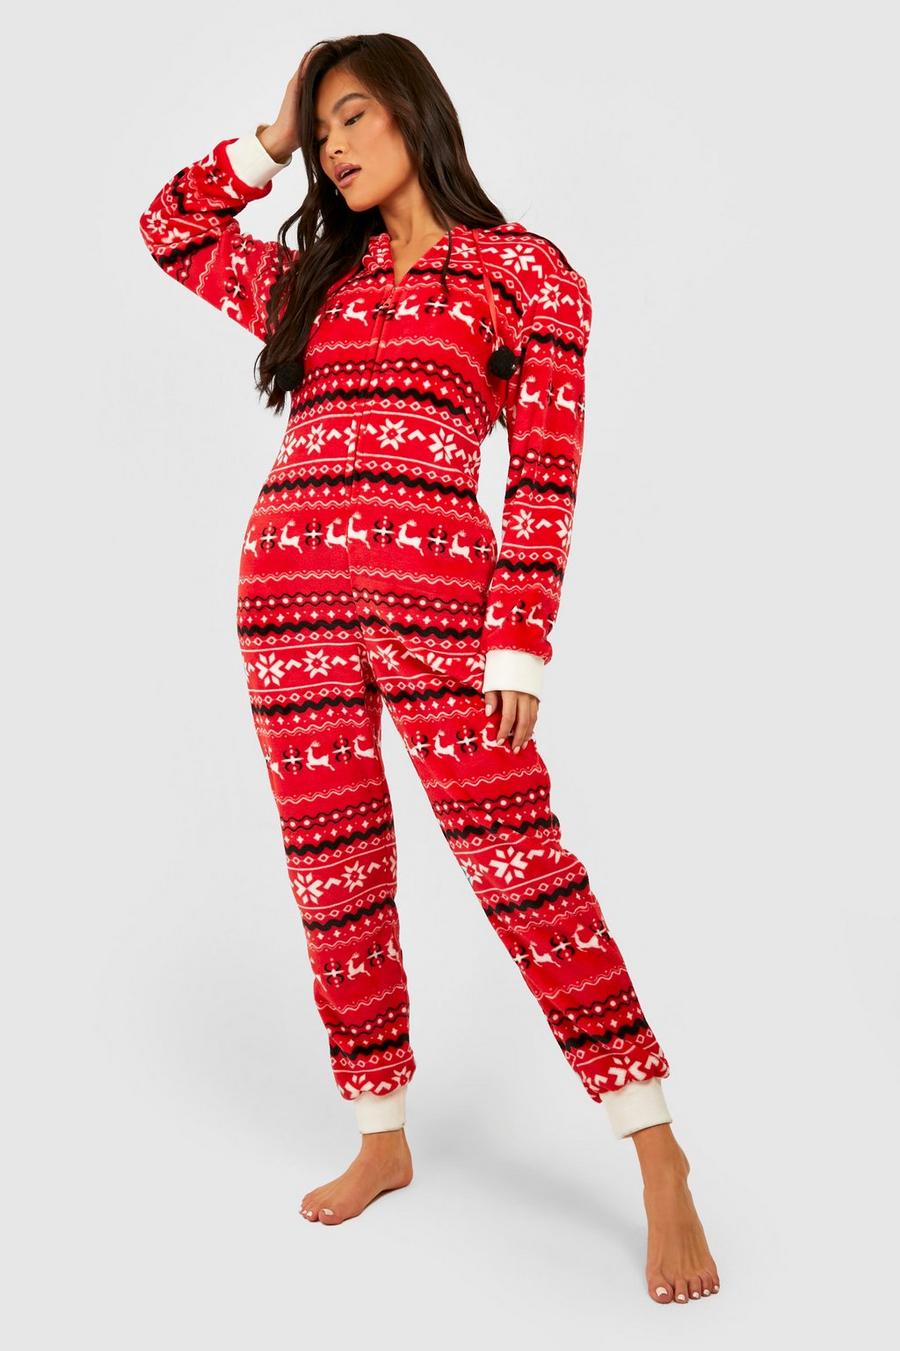 Yiiciovy Christmas Matching Pajamas for Couples Funny Printed